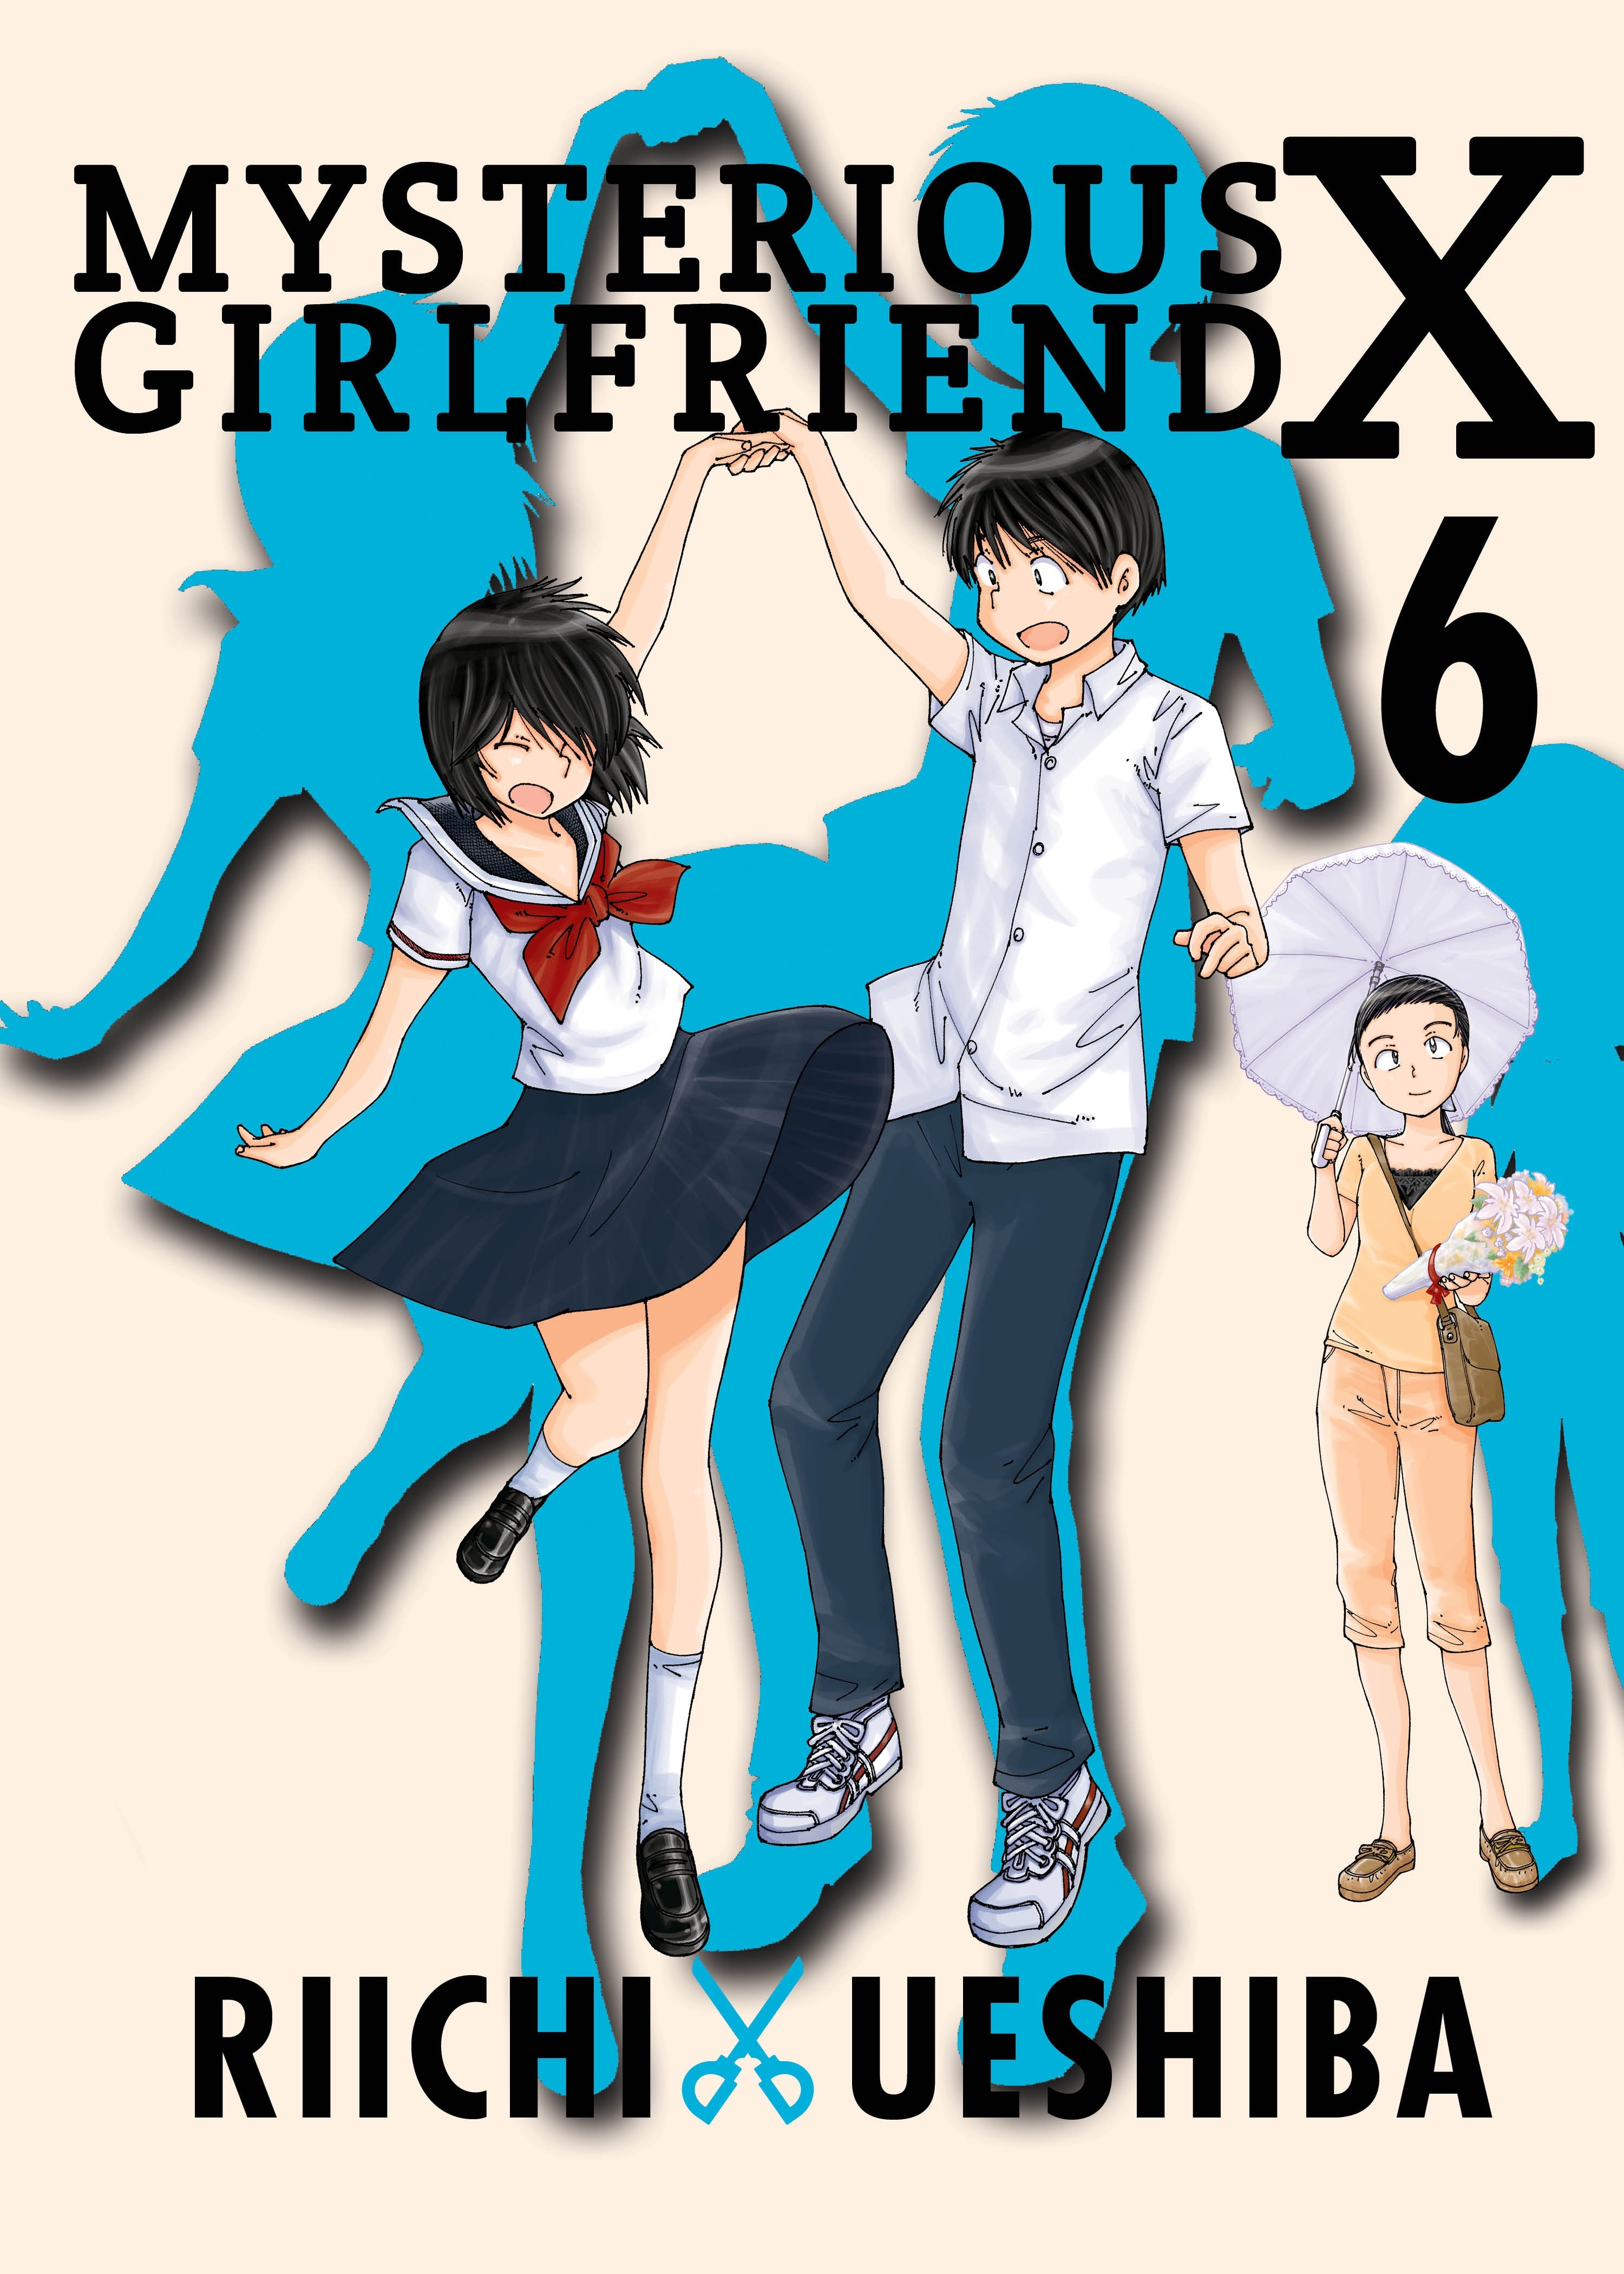 Mysterious Girlfriend X, 6 by Riichi Ueshiba - Penguin Books Australia